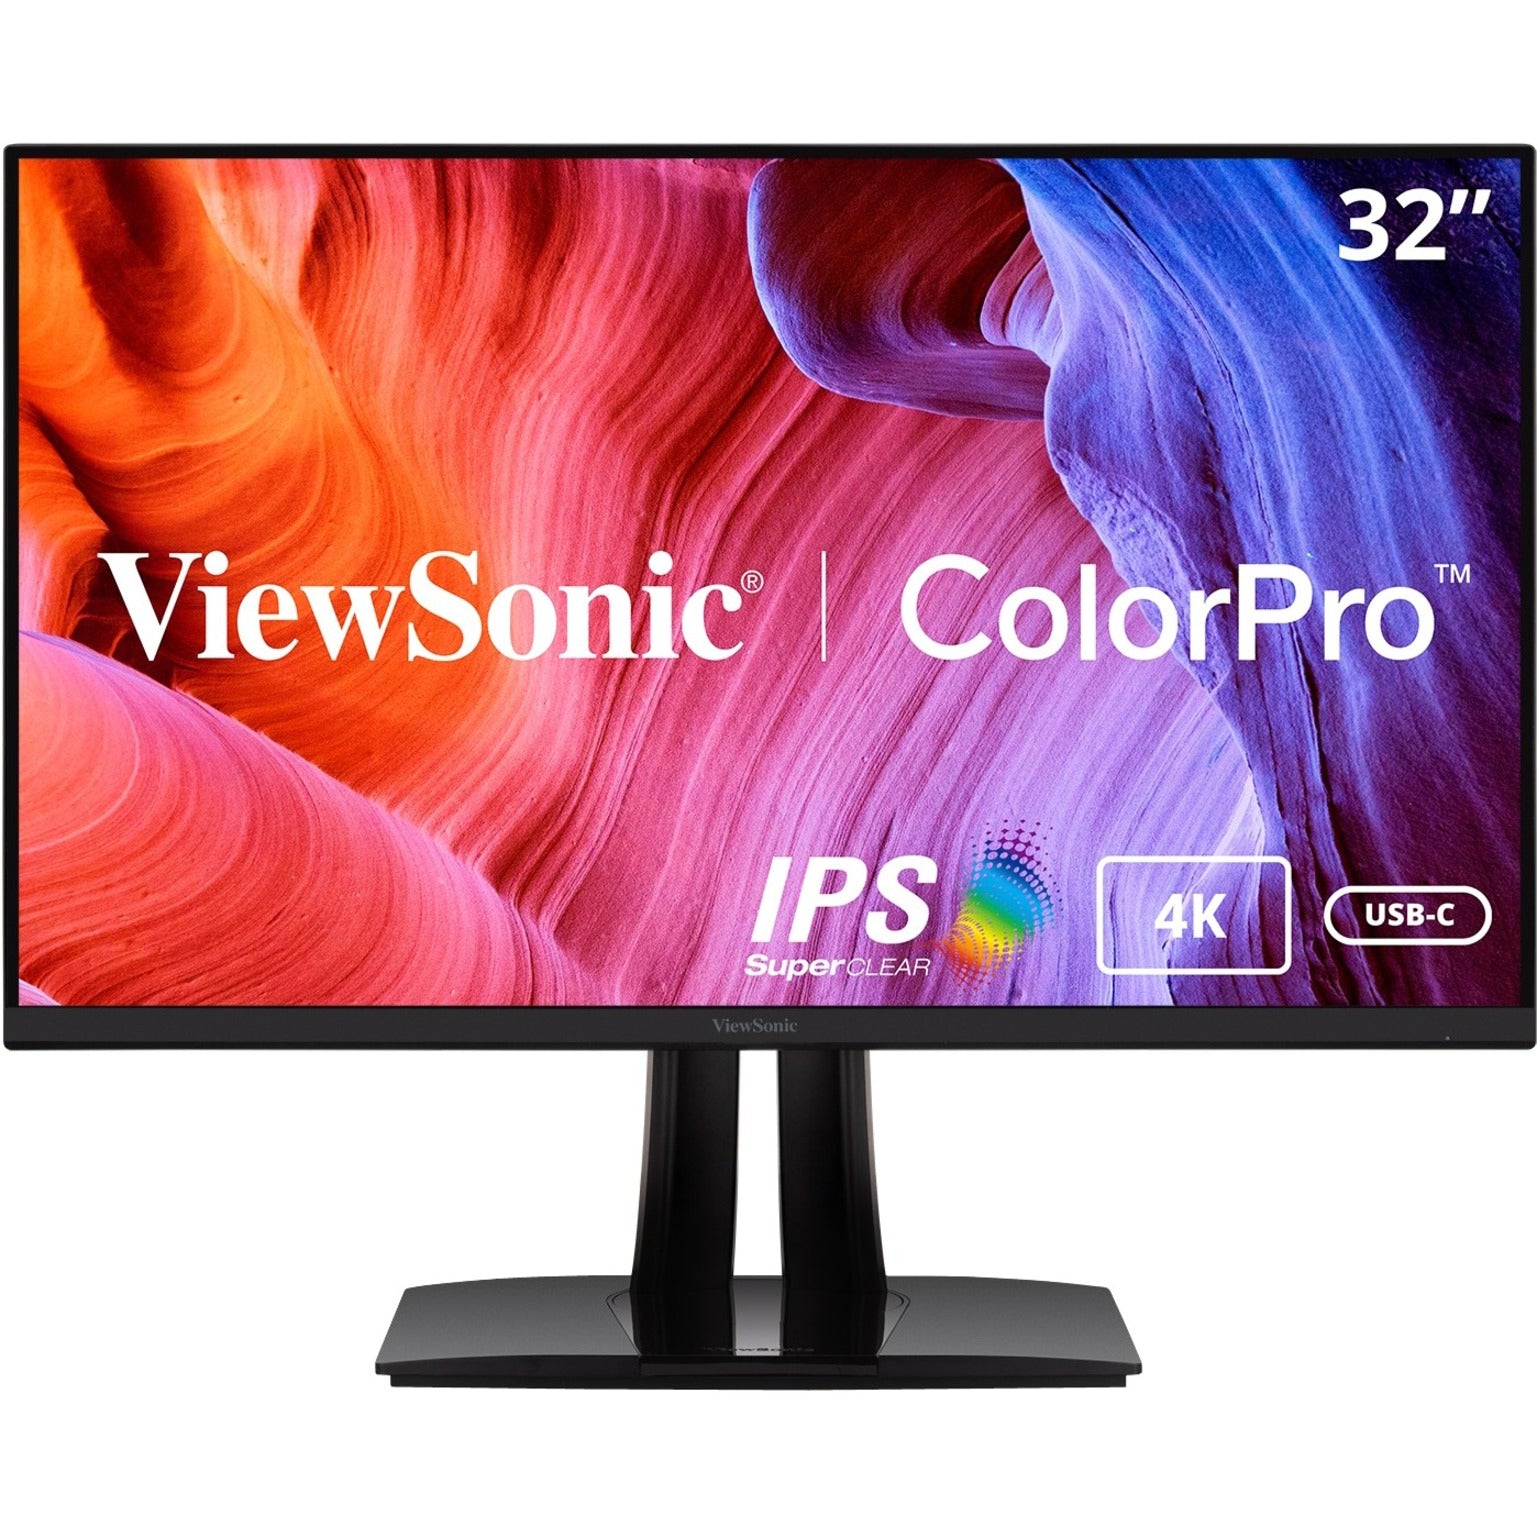 ViewSonic VP3256-4K ColorPro 32 4K UHD Professional Graphic Design Monitor with USB-C (90W), Pantone Validated